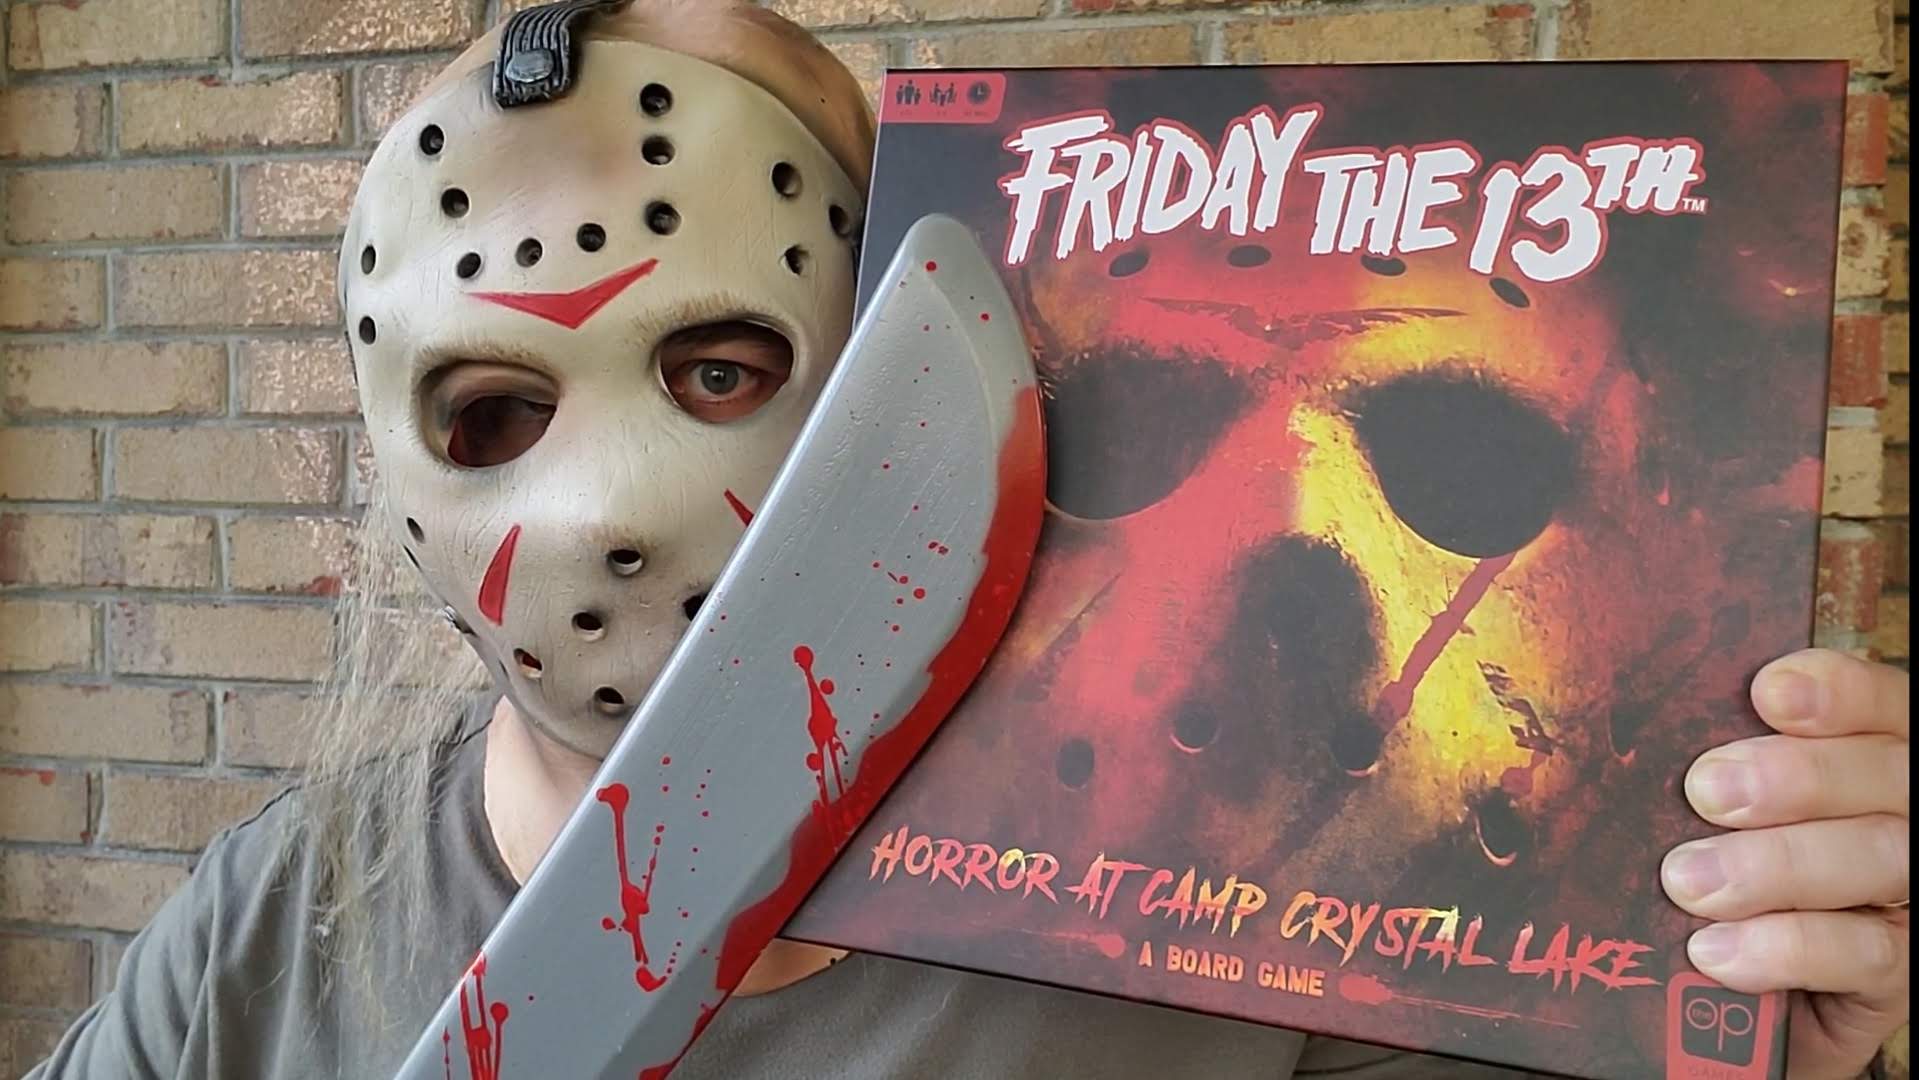 Friday the 13th: Horror at Camp Crystal Lake, Board Game